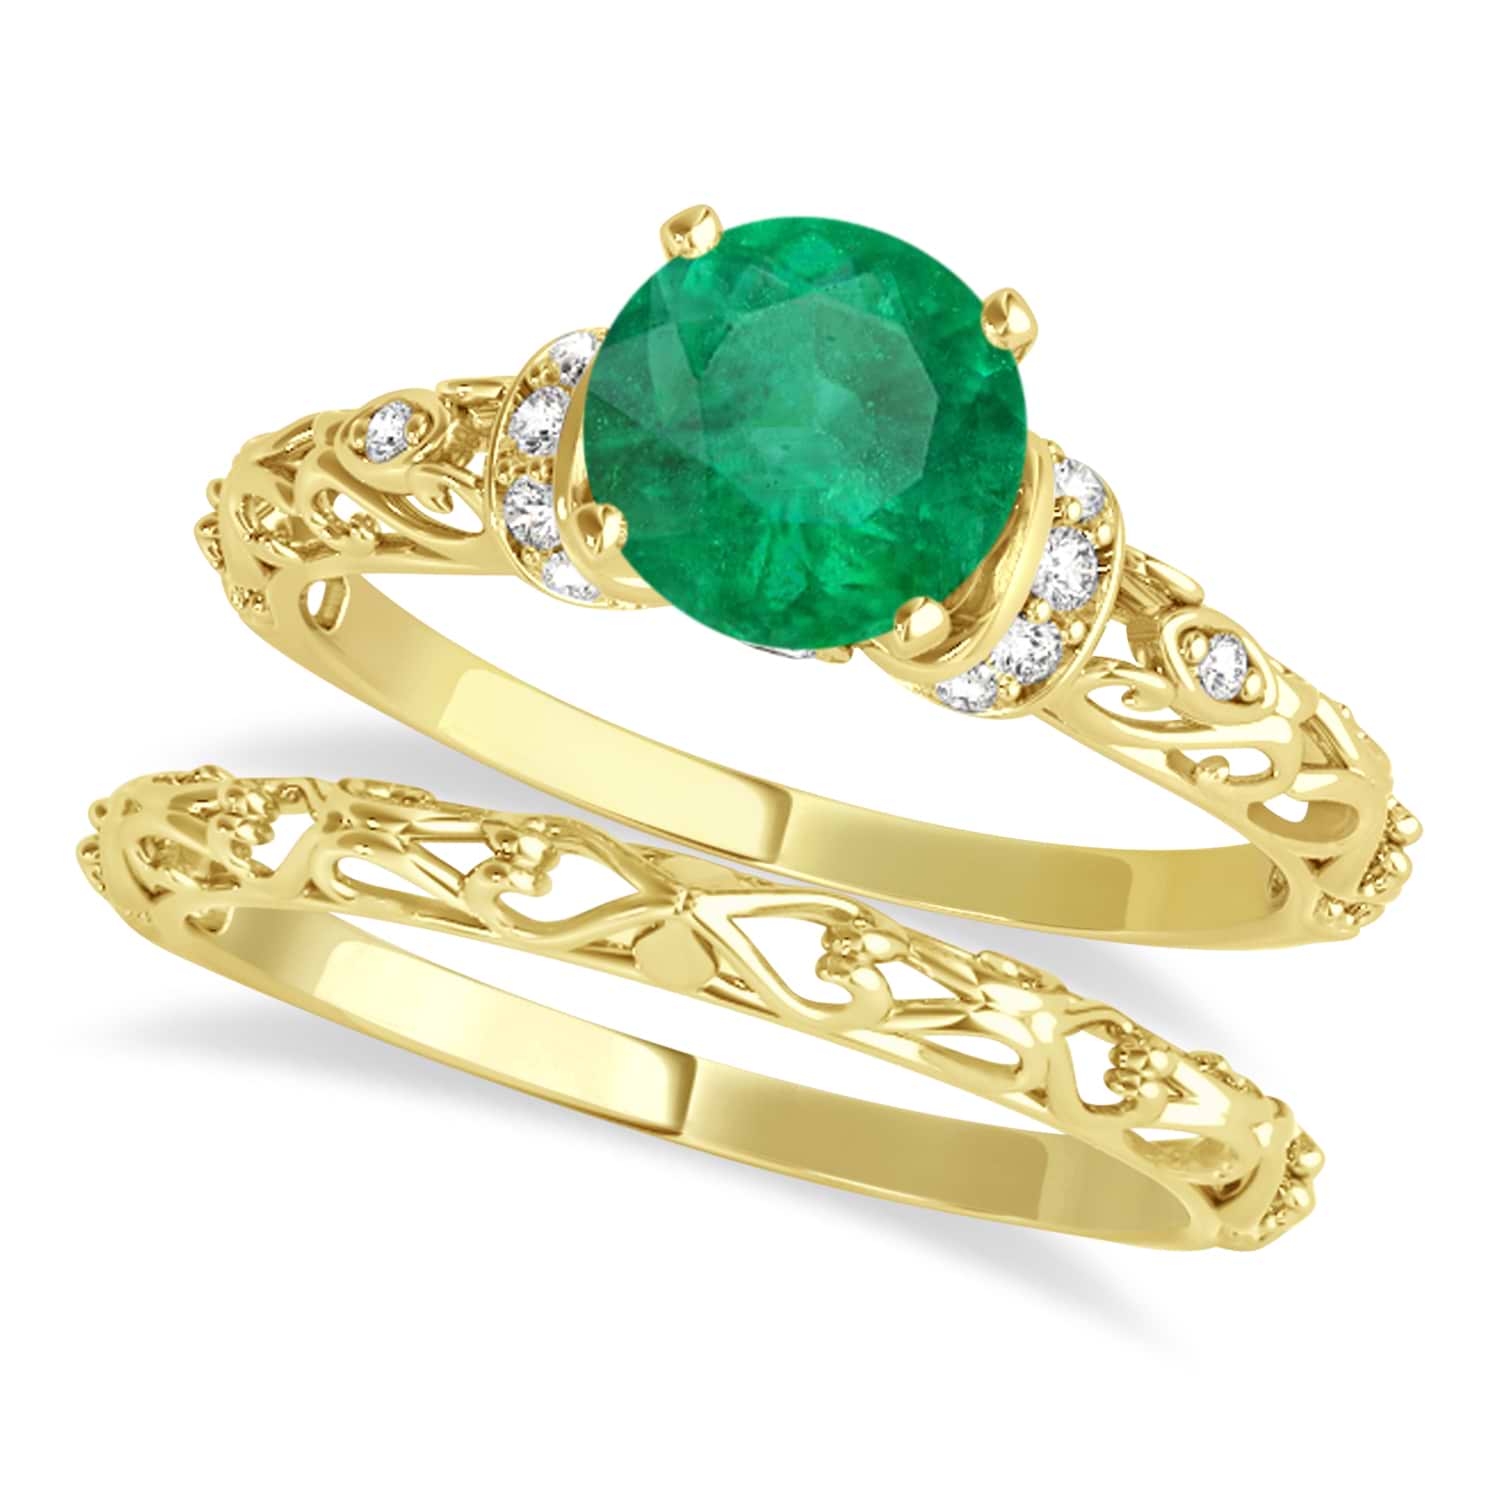 Emerald & Diamond Antique Style Bridal Set 18k Yellow Gold (1.12ct)